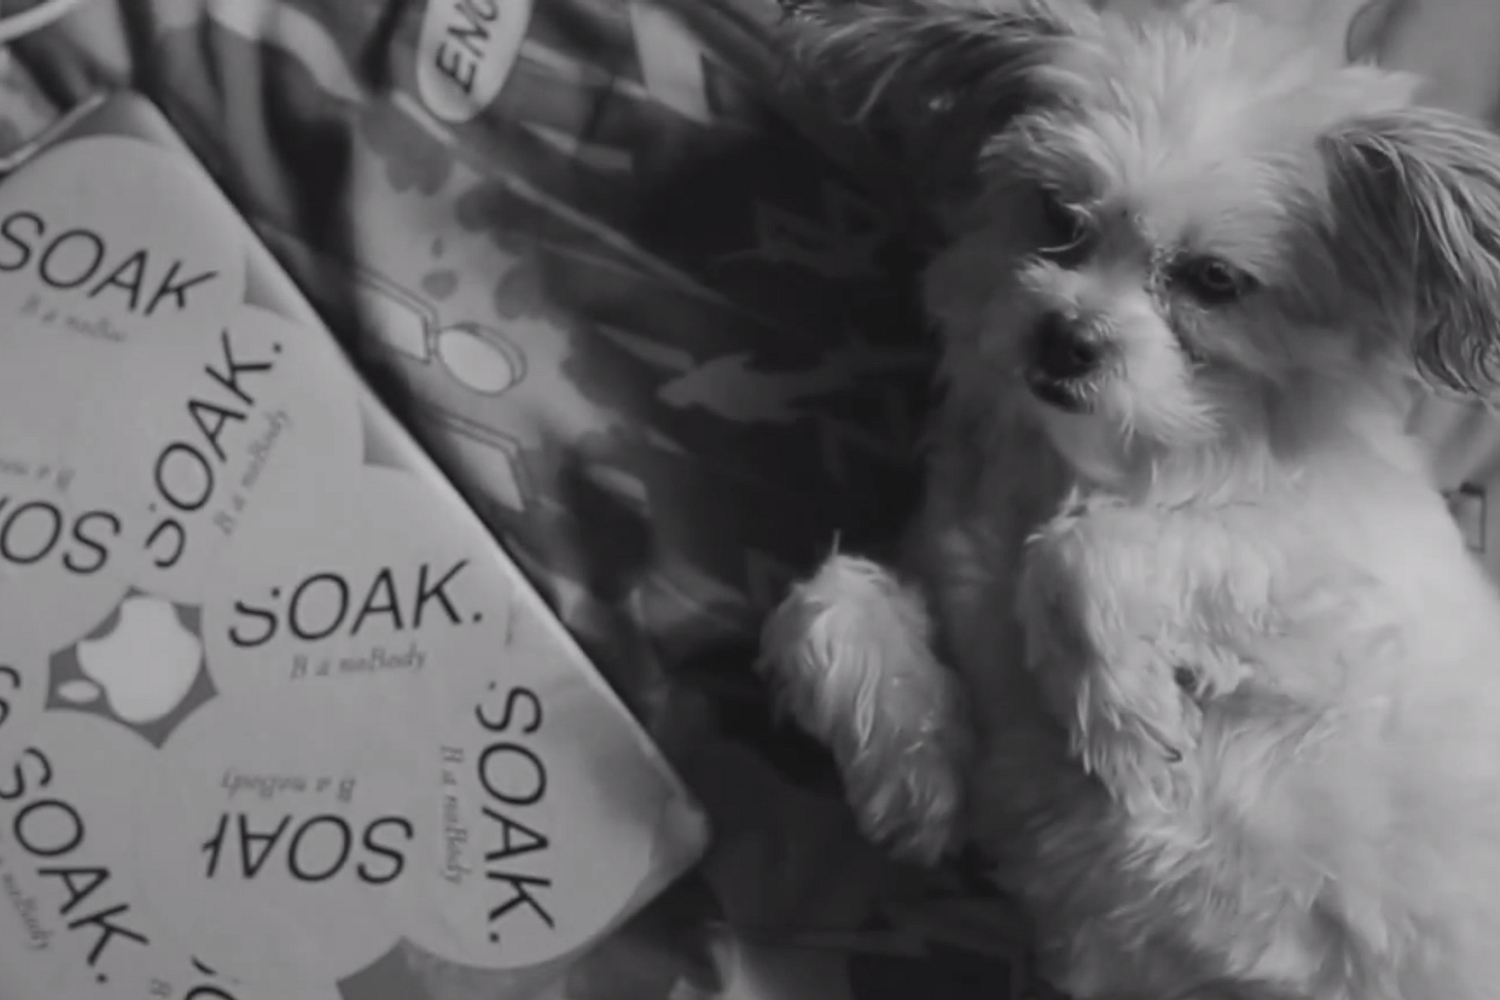 SOAK’s new ‘Blud’ video has puppies, kart-racing and skateboarding